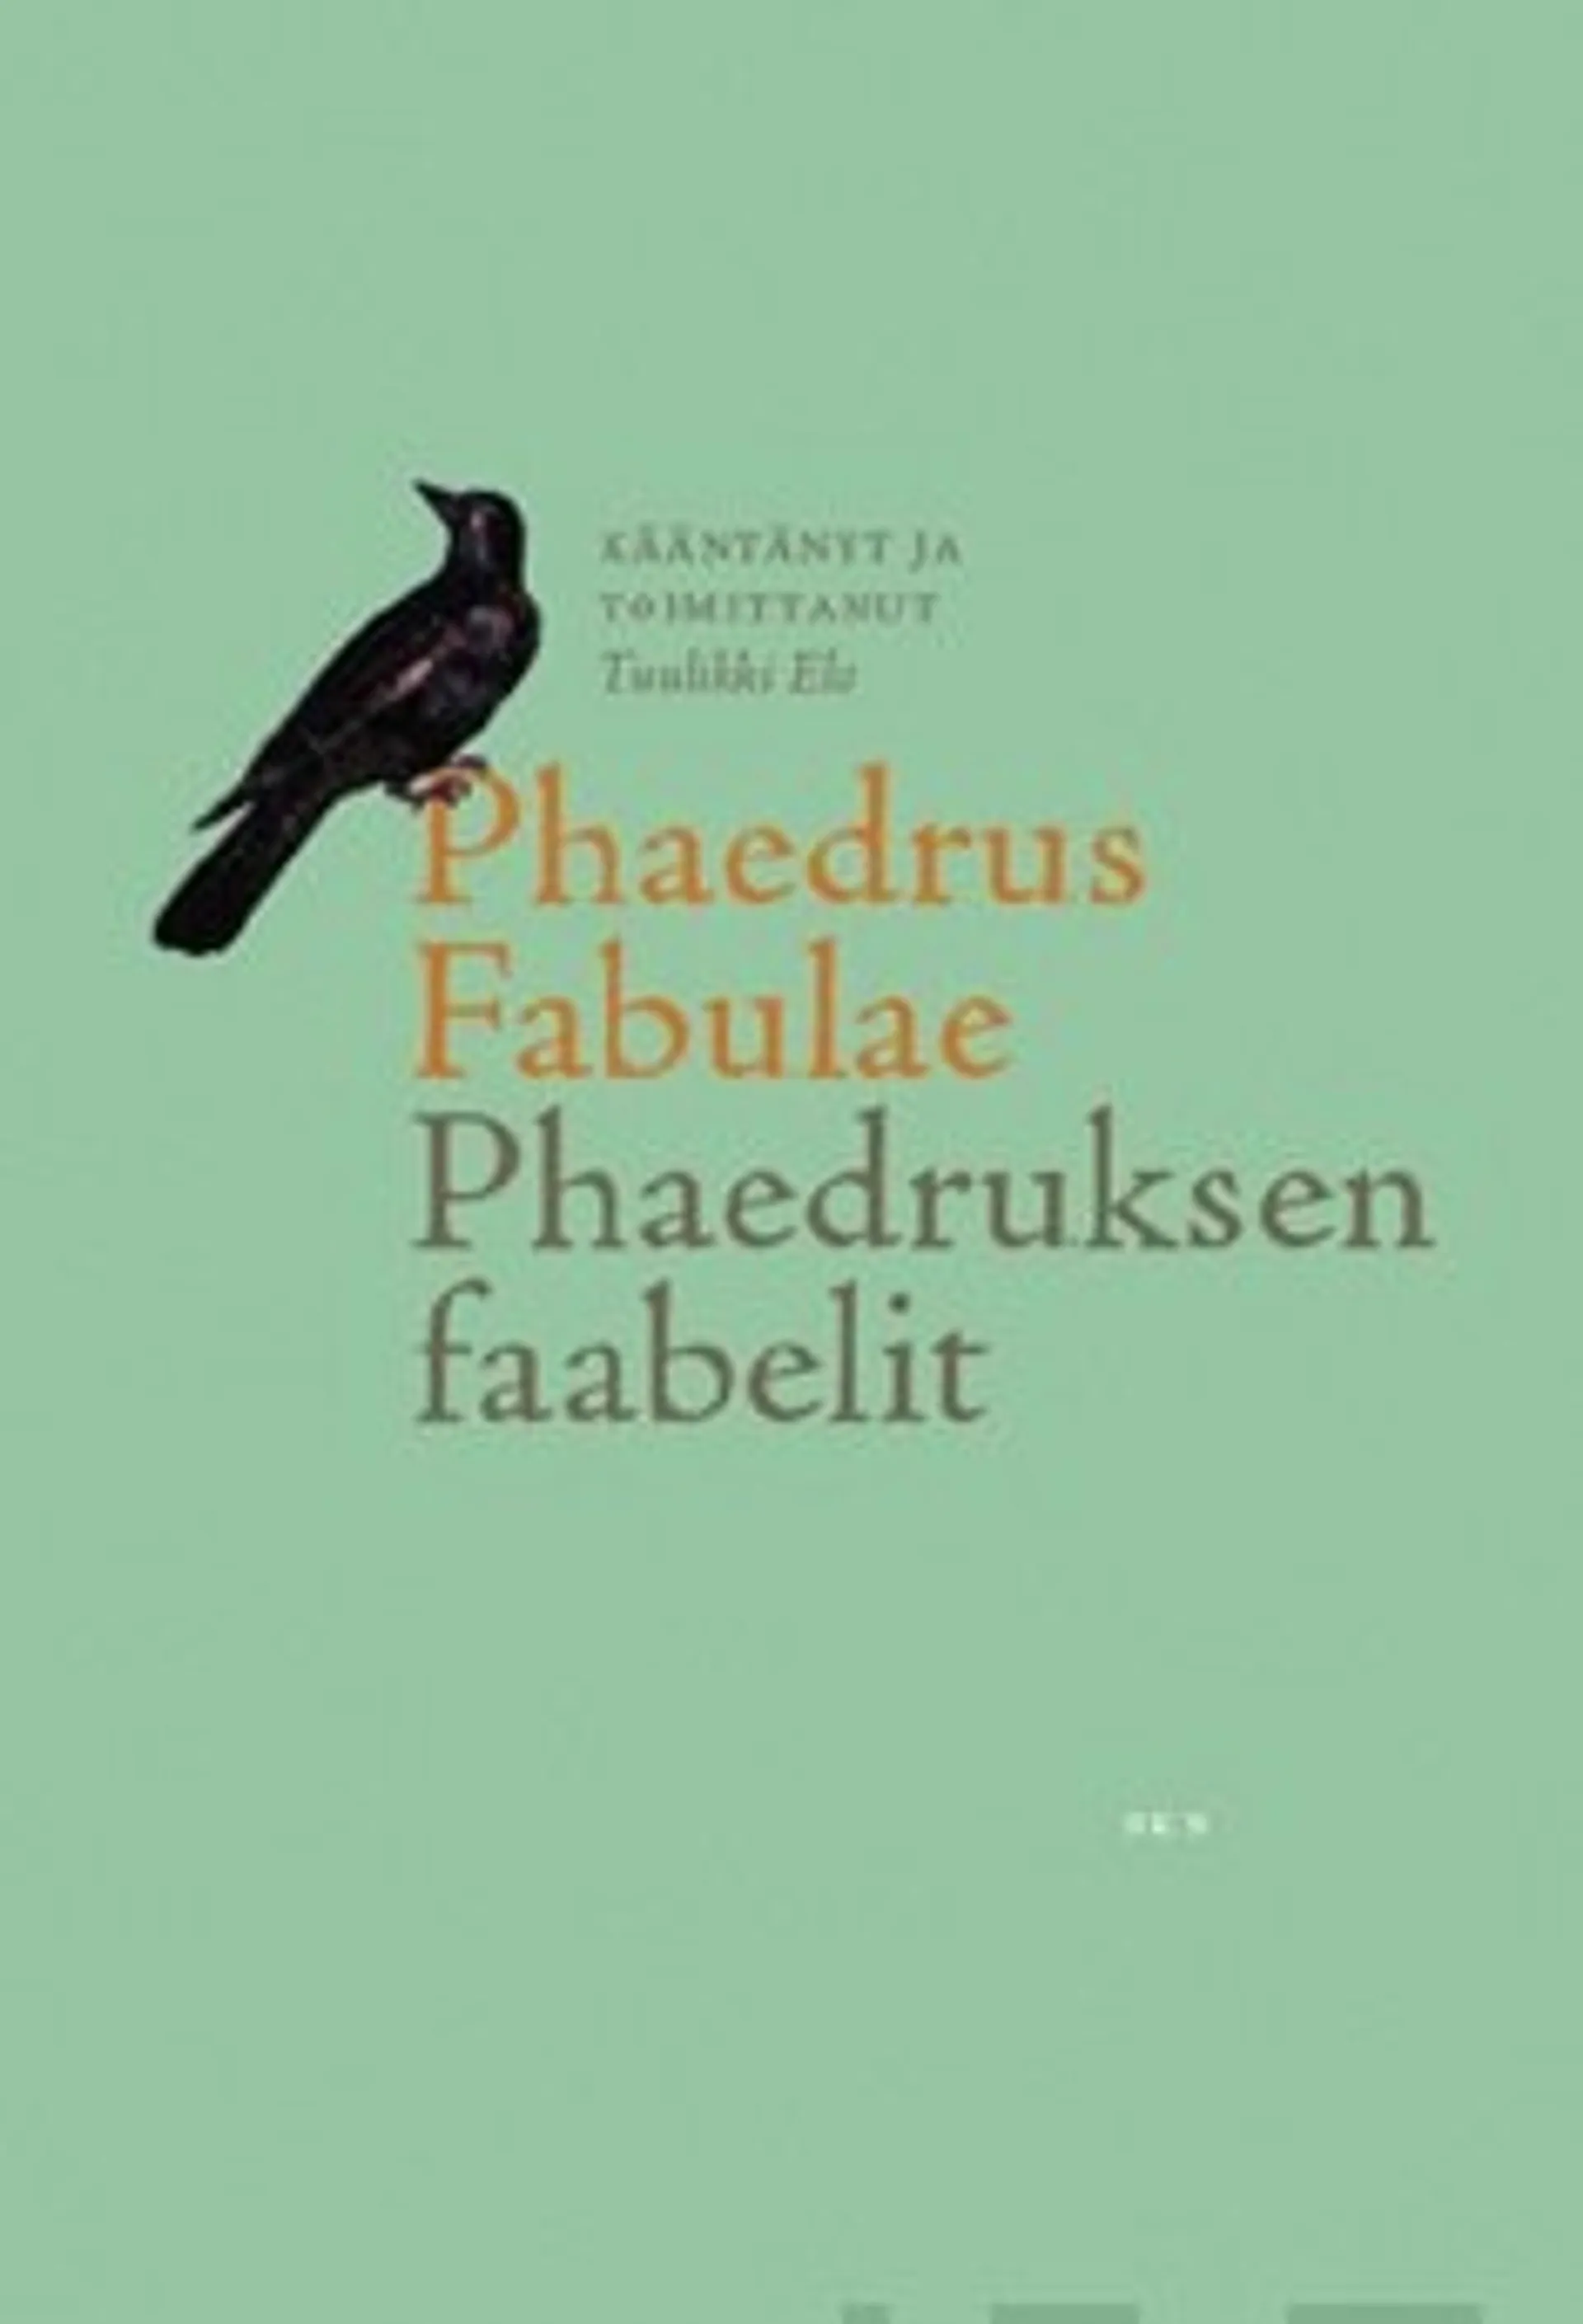 Phaedrus fabulae - Phaedruksen faabelit